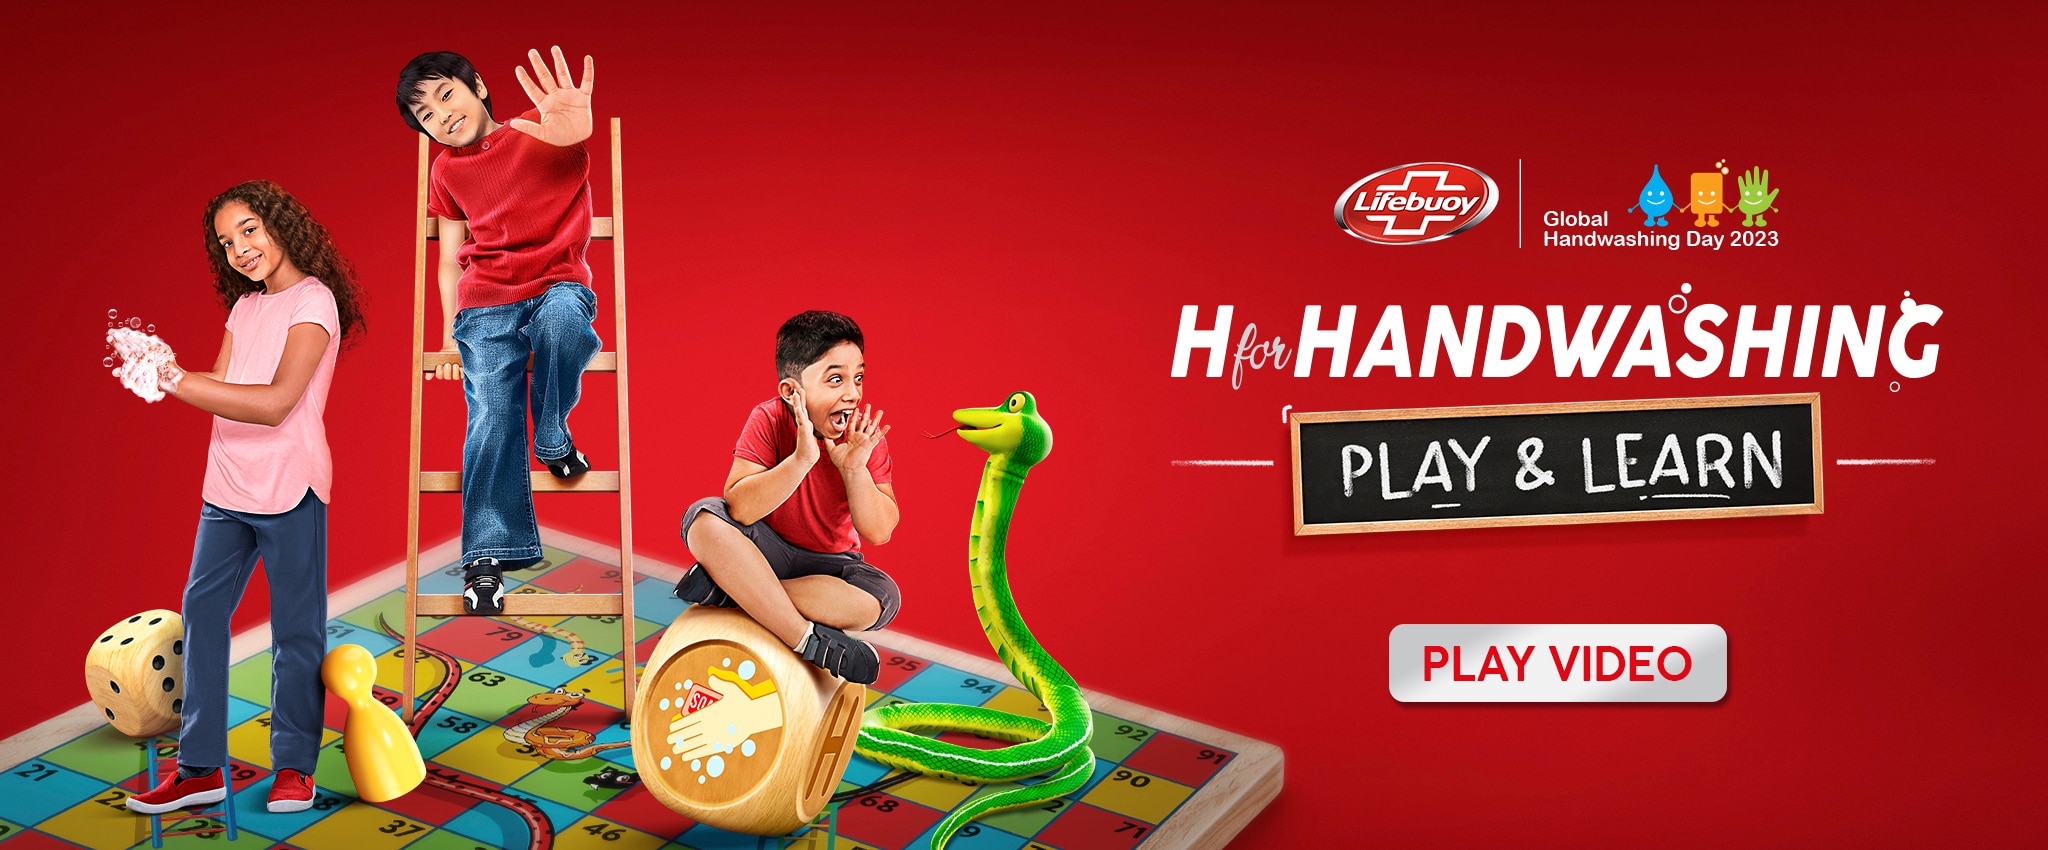 H for Handwashing Play Video